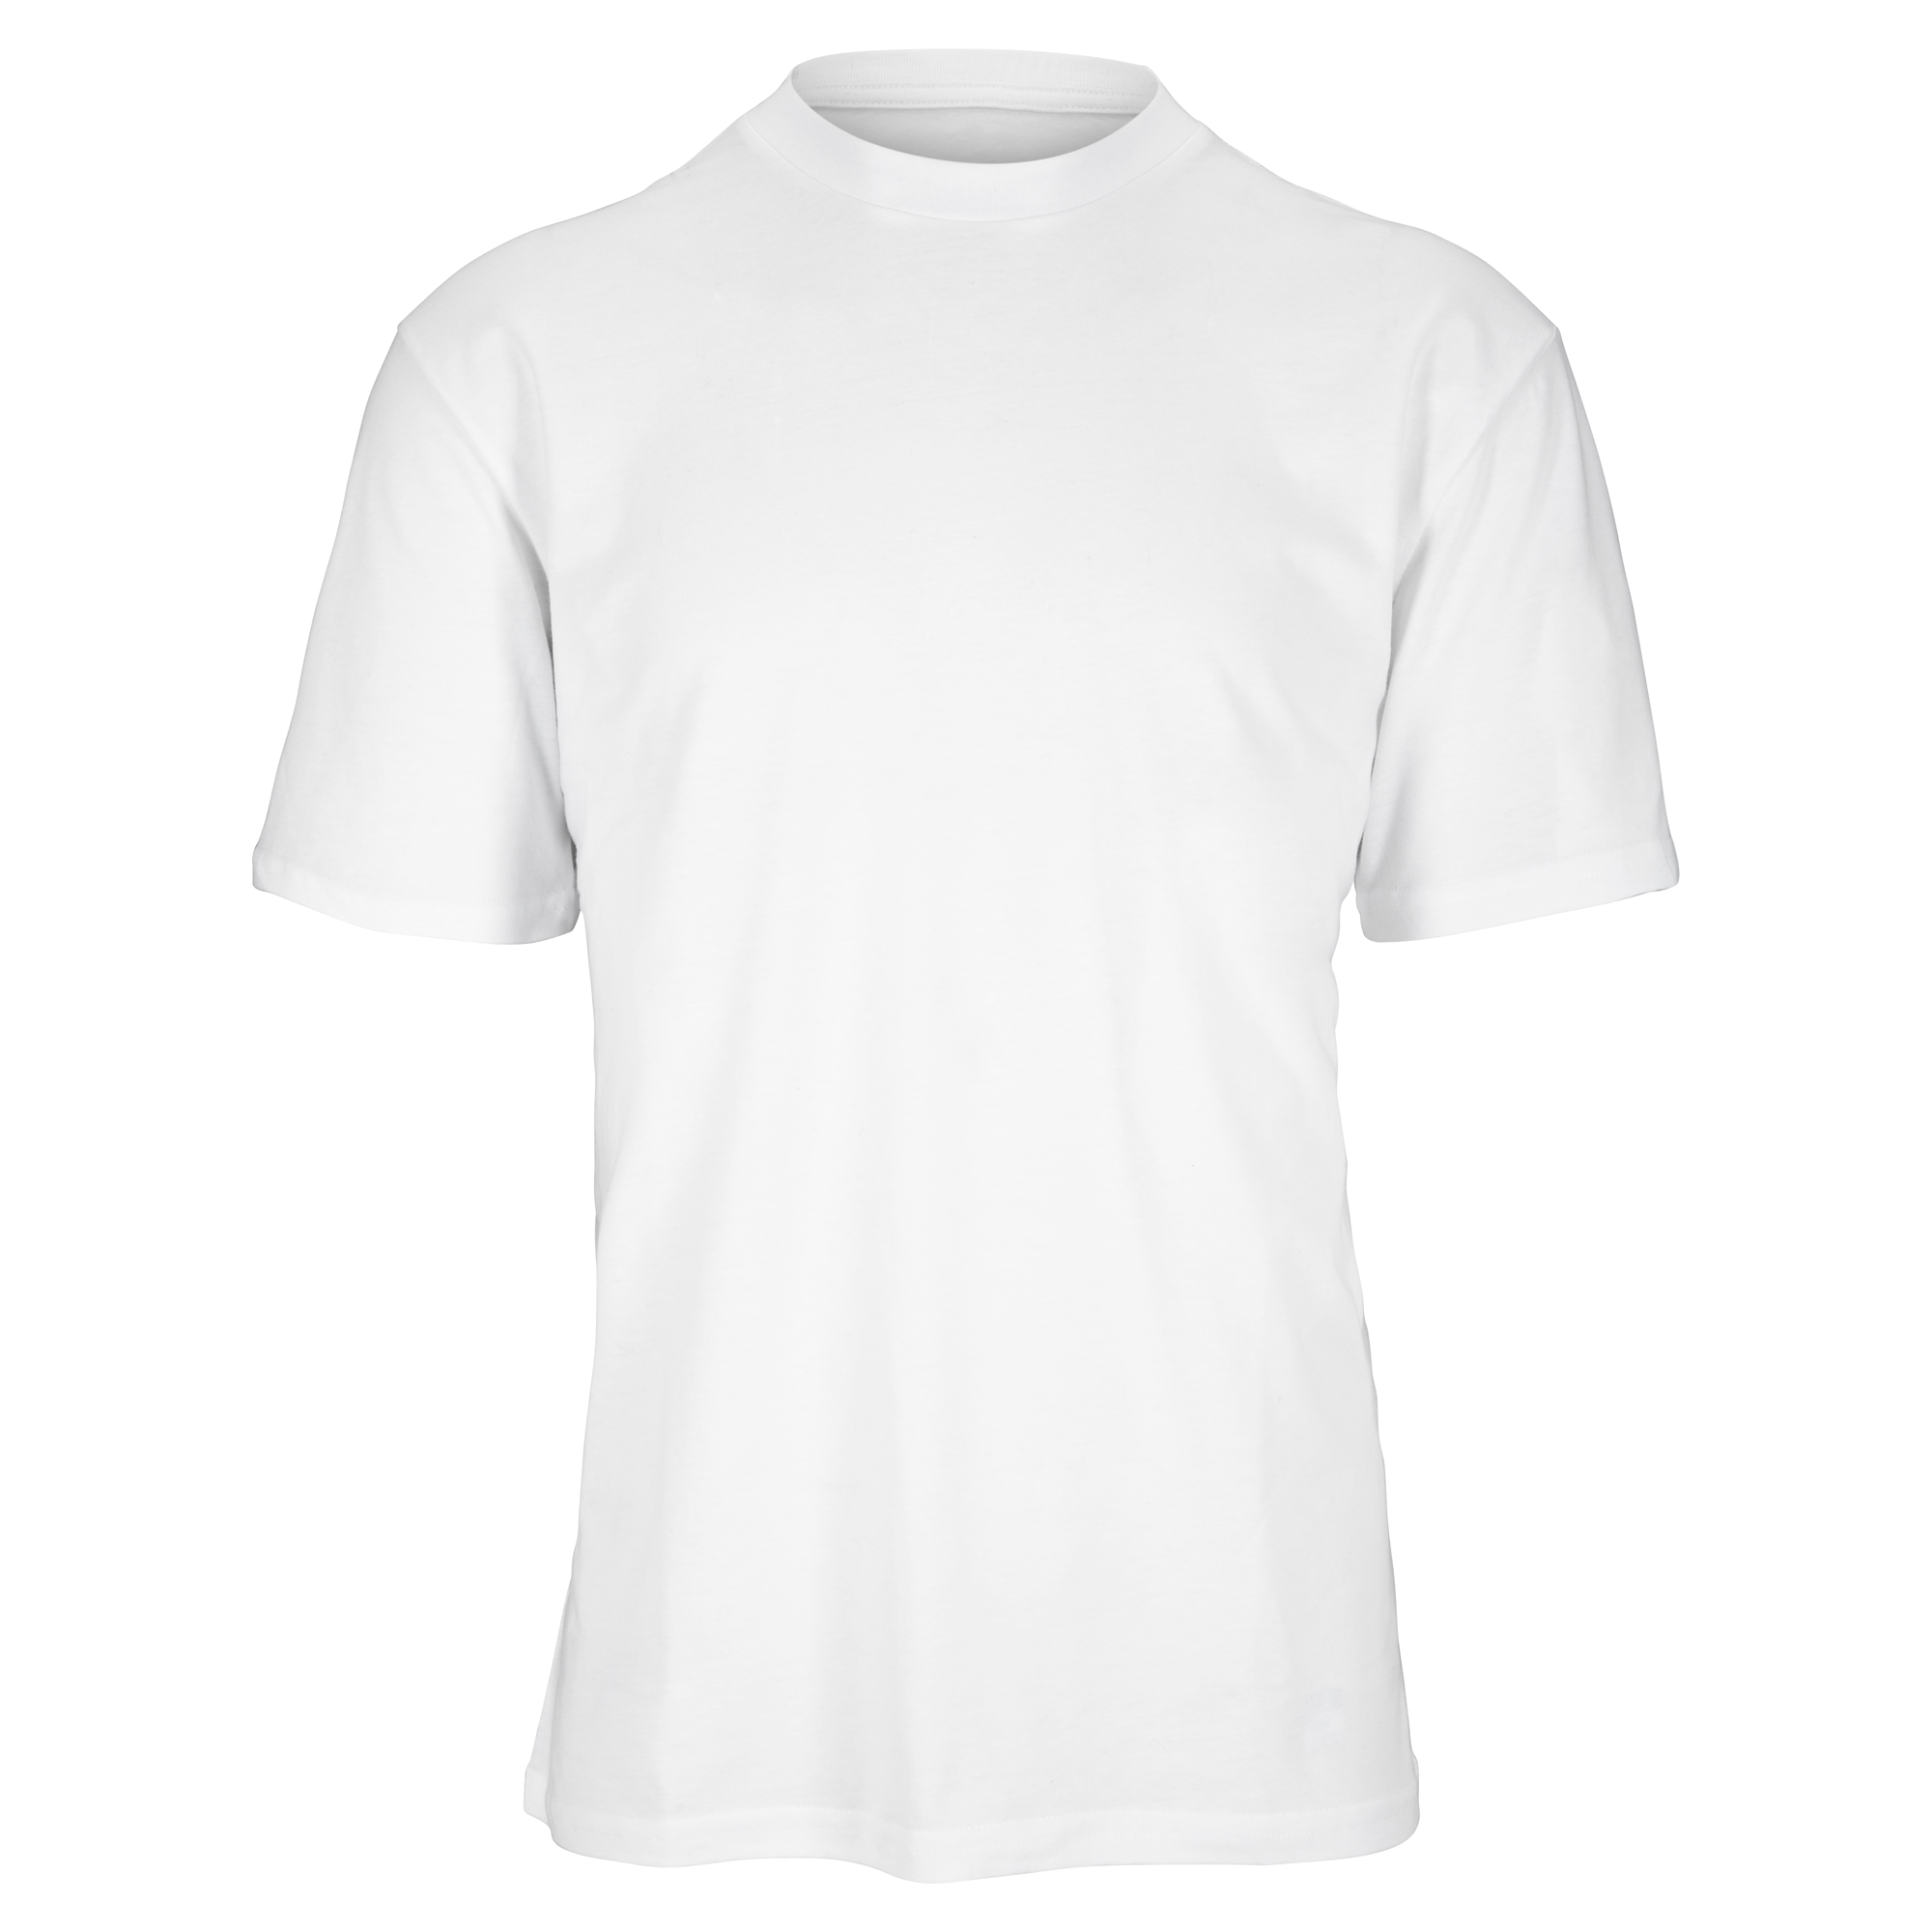 Herren-T-Shirt weiß 2er-Pack XL (56) + product picture